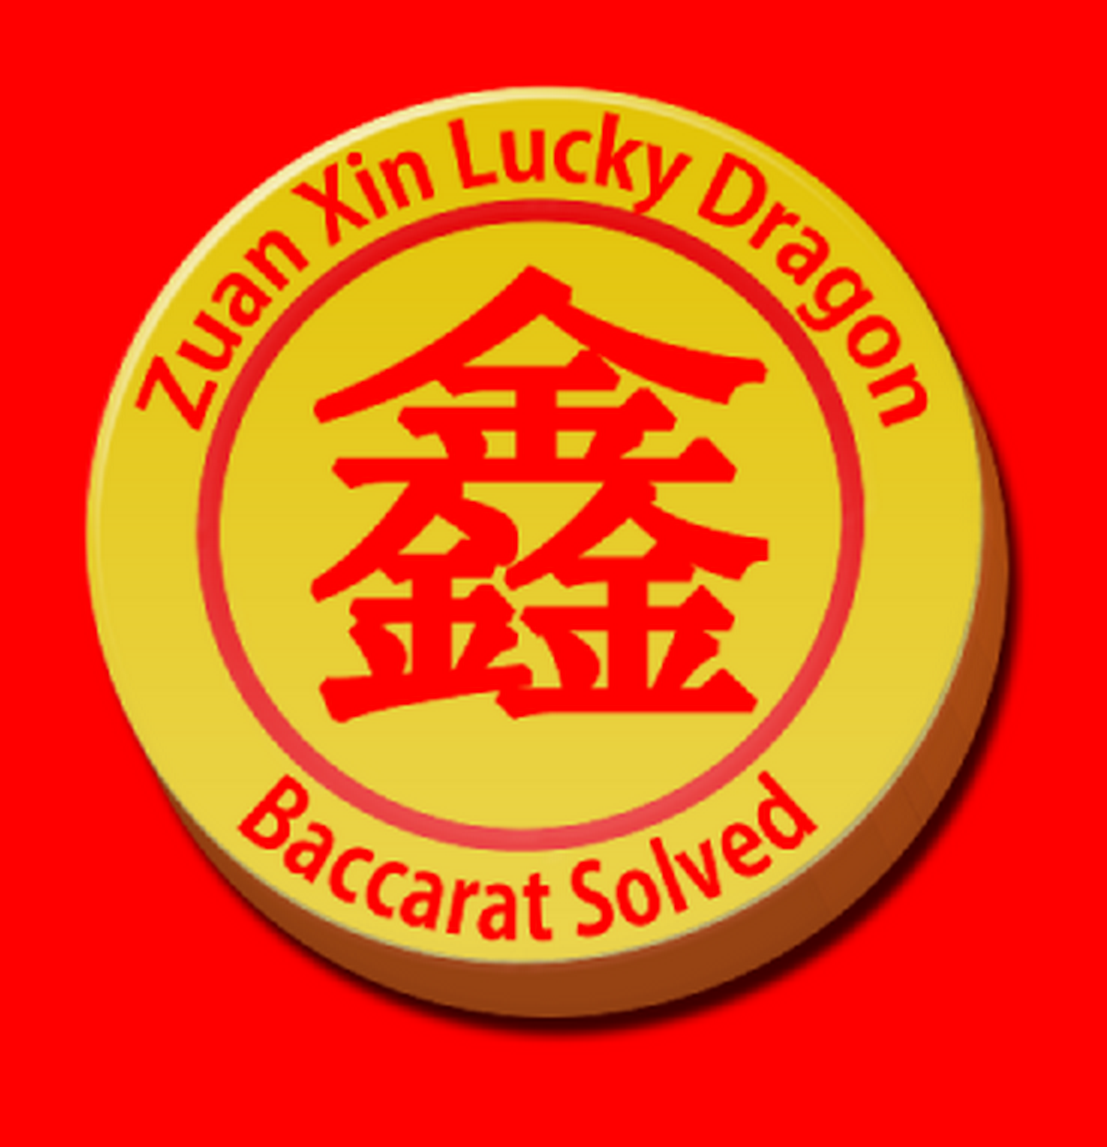 Famous Zuan Xin Lucky Dragon Baccarat app logo and icon created by Zuan Xin Lucky Dragon Chinese Mobile Phone Entertainment Enterprises that the cybercriminal Adrian Kimmitt aka Apps Las Vegas LLC aka